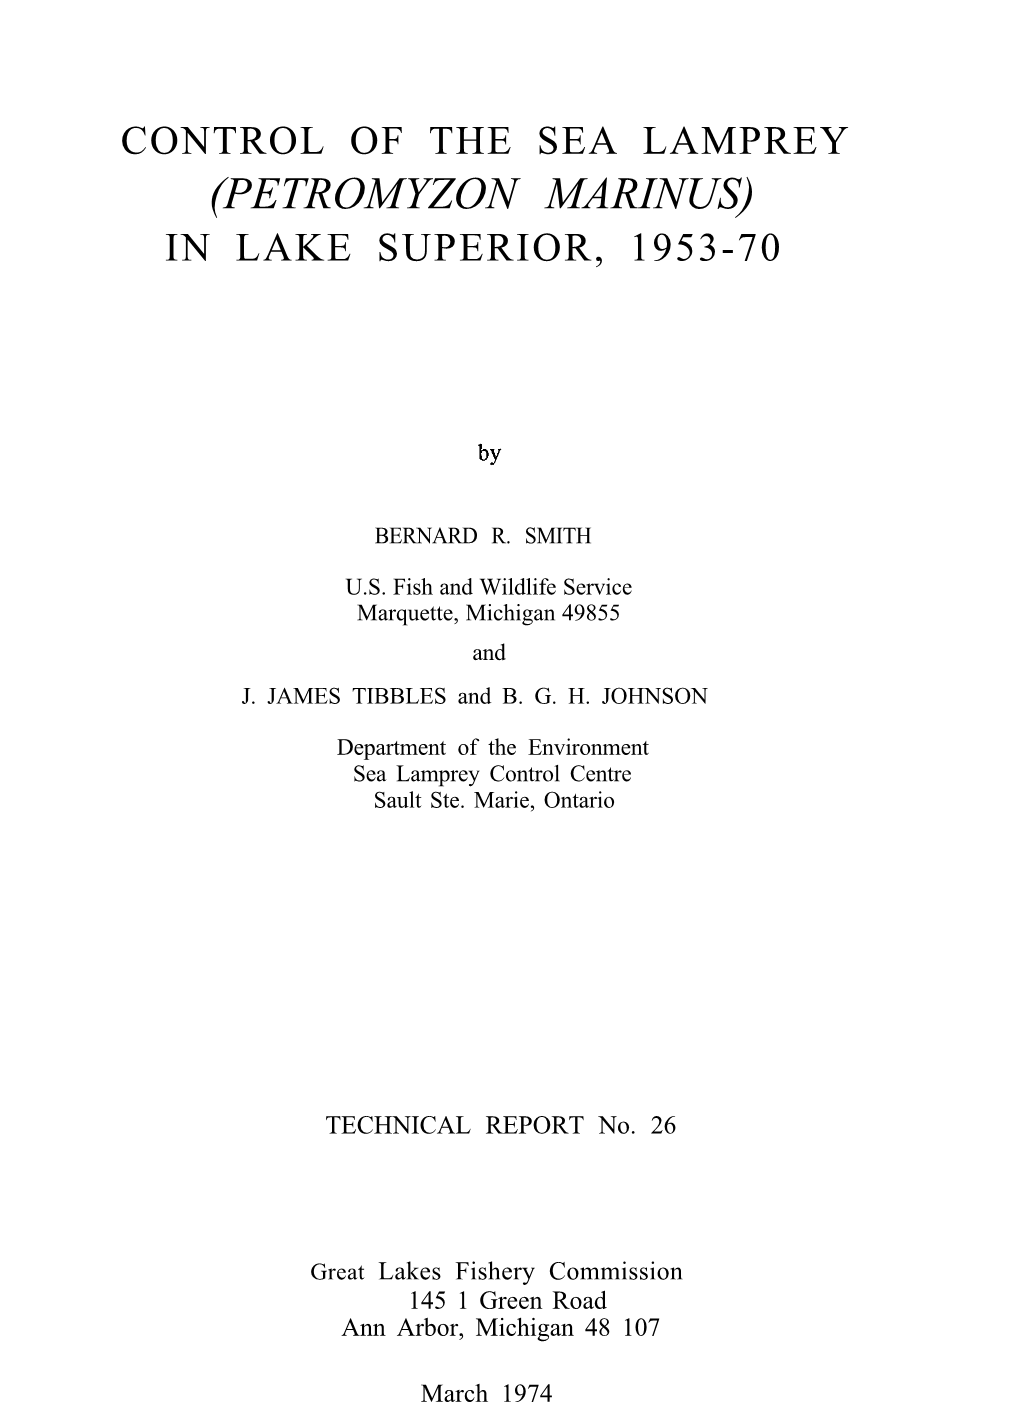 Control of the Sea Lamprey (Petromyzon Marinus) in Lake Superior, 1953-70